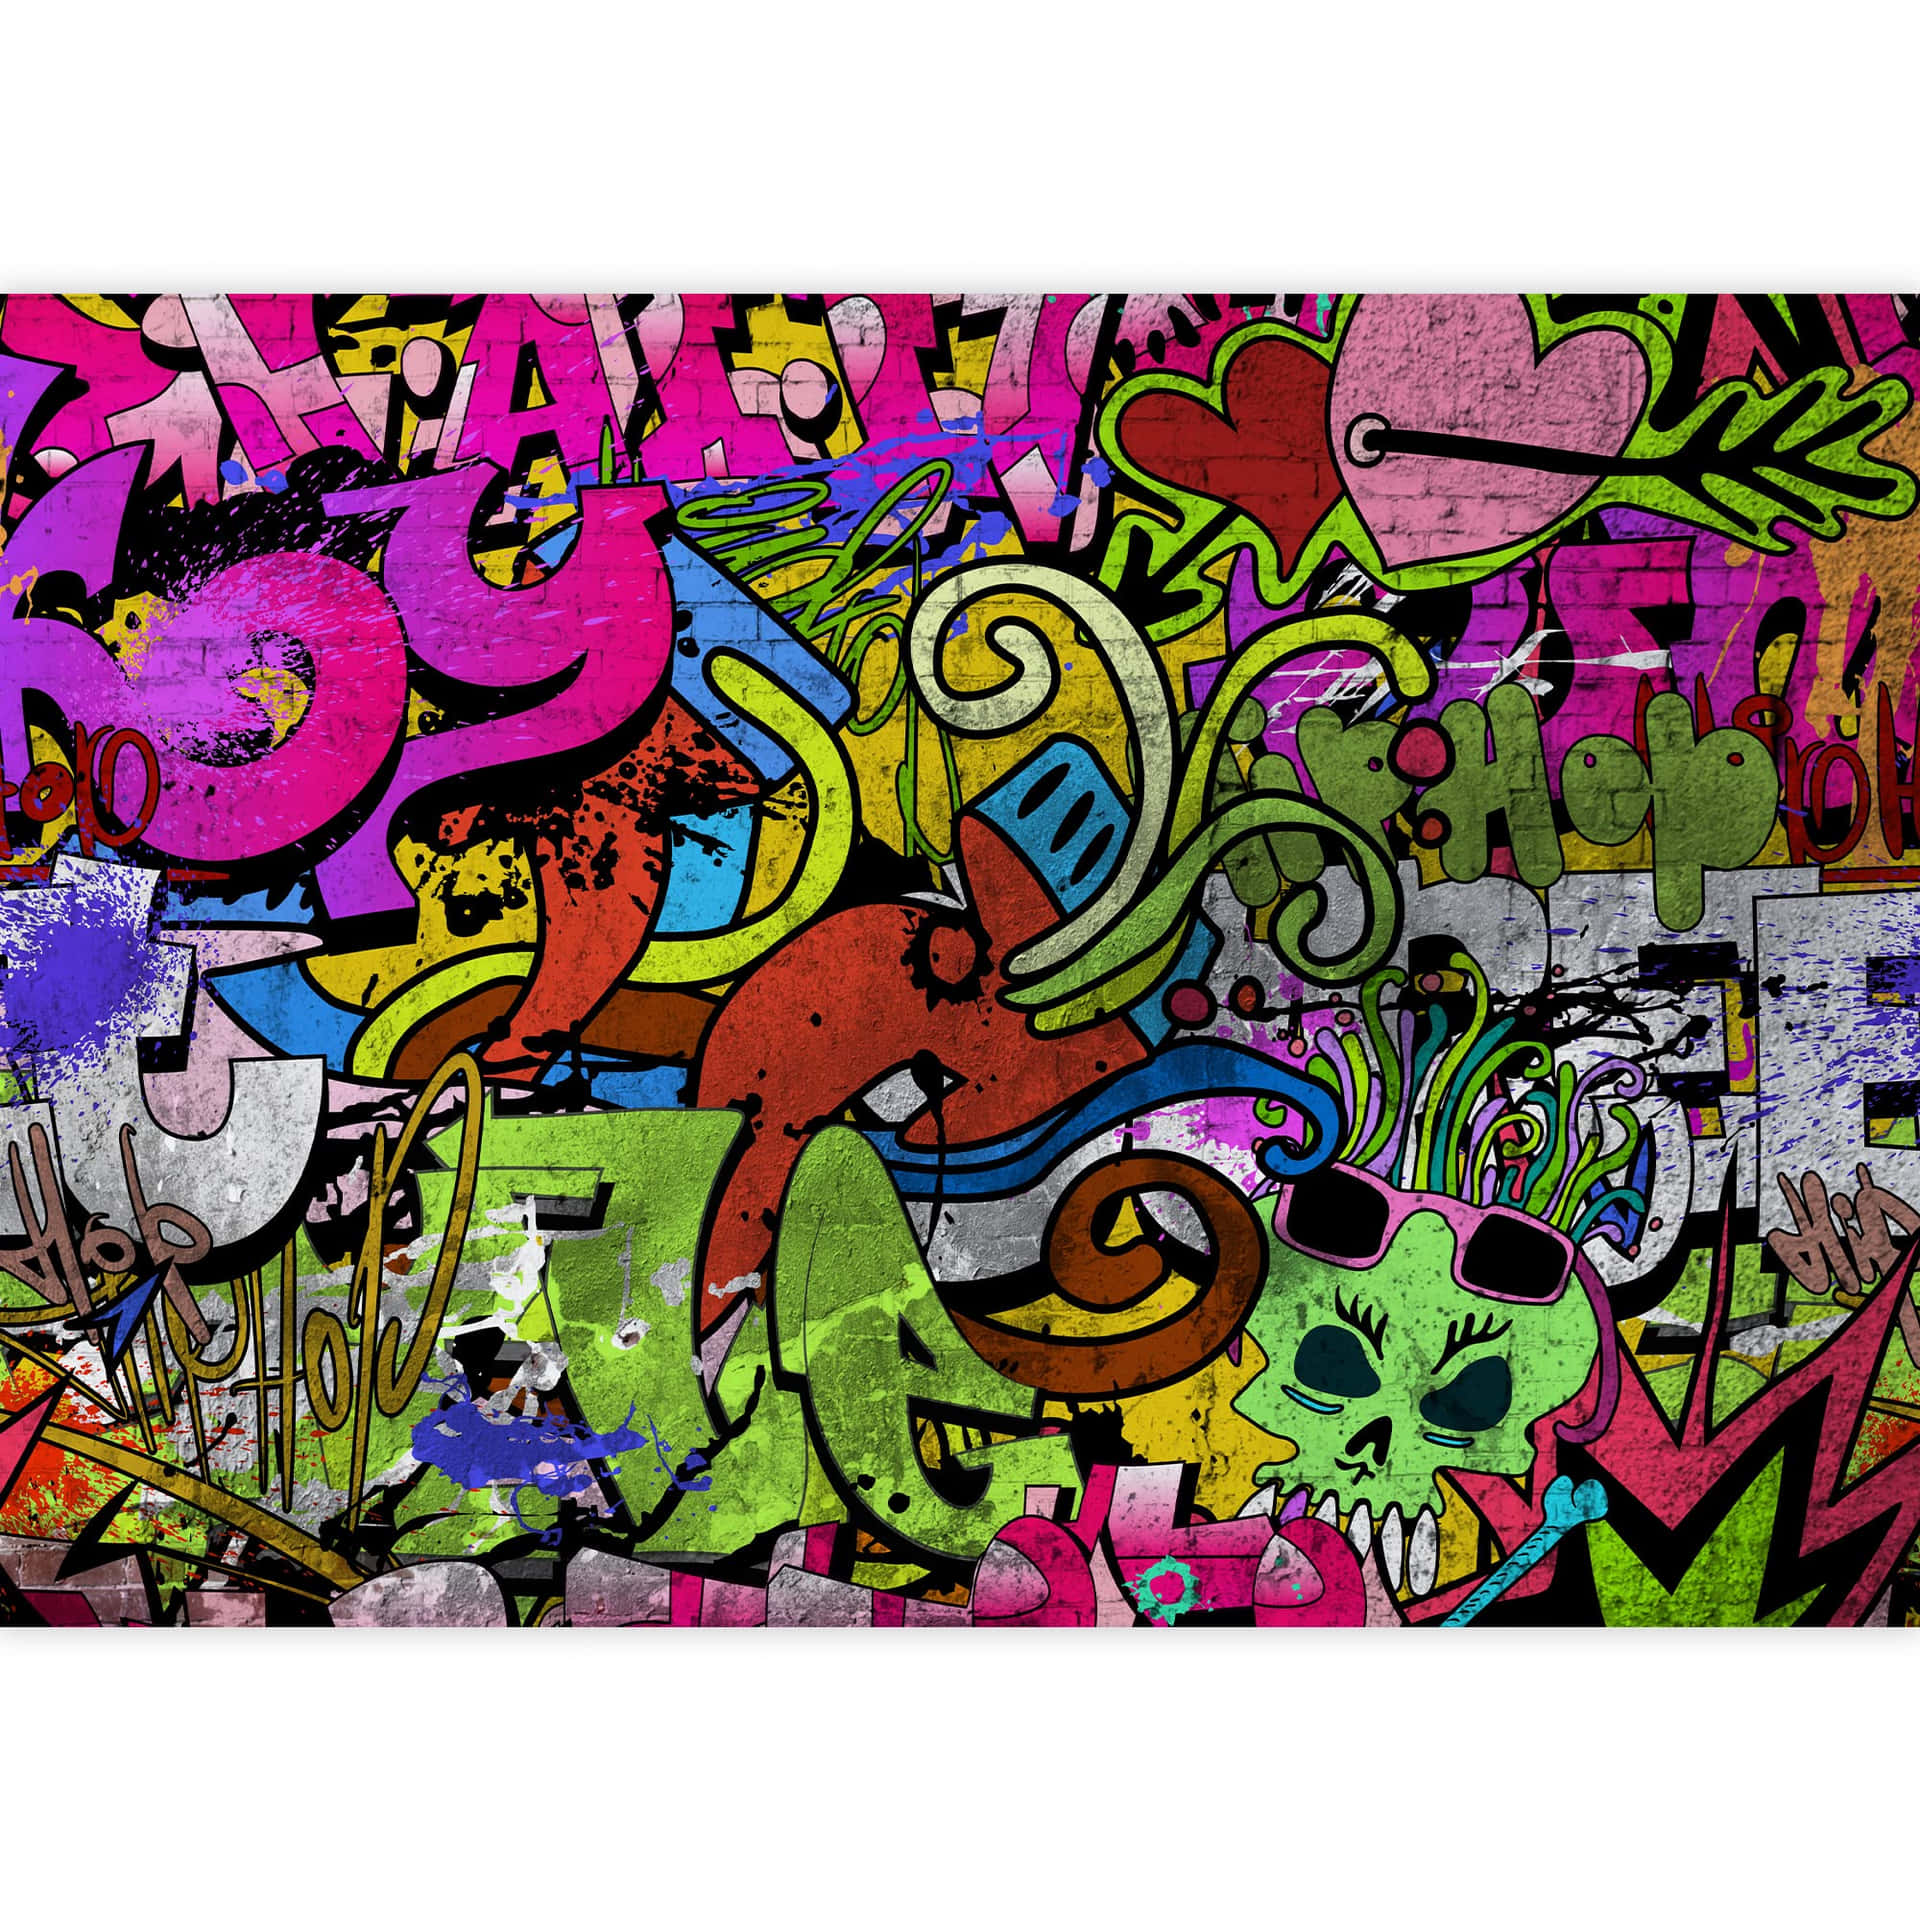 Caption: Urban Artistry: Colorful Graffiti Mural